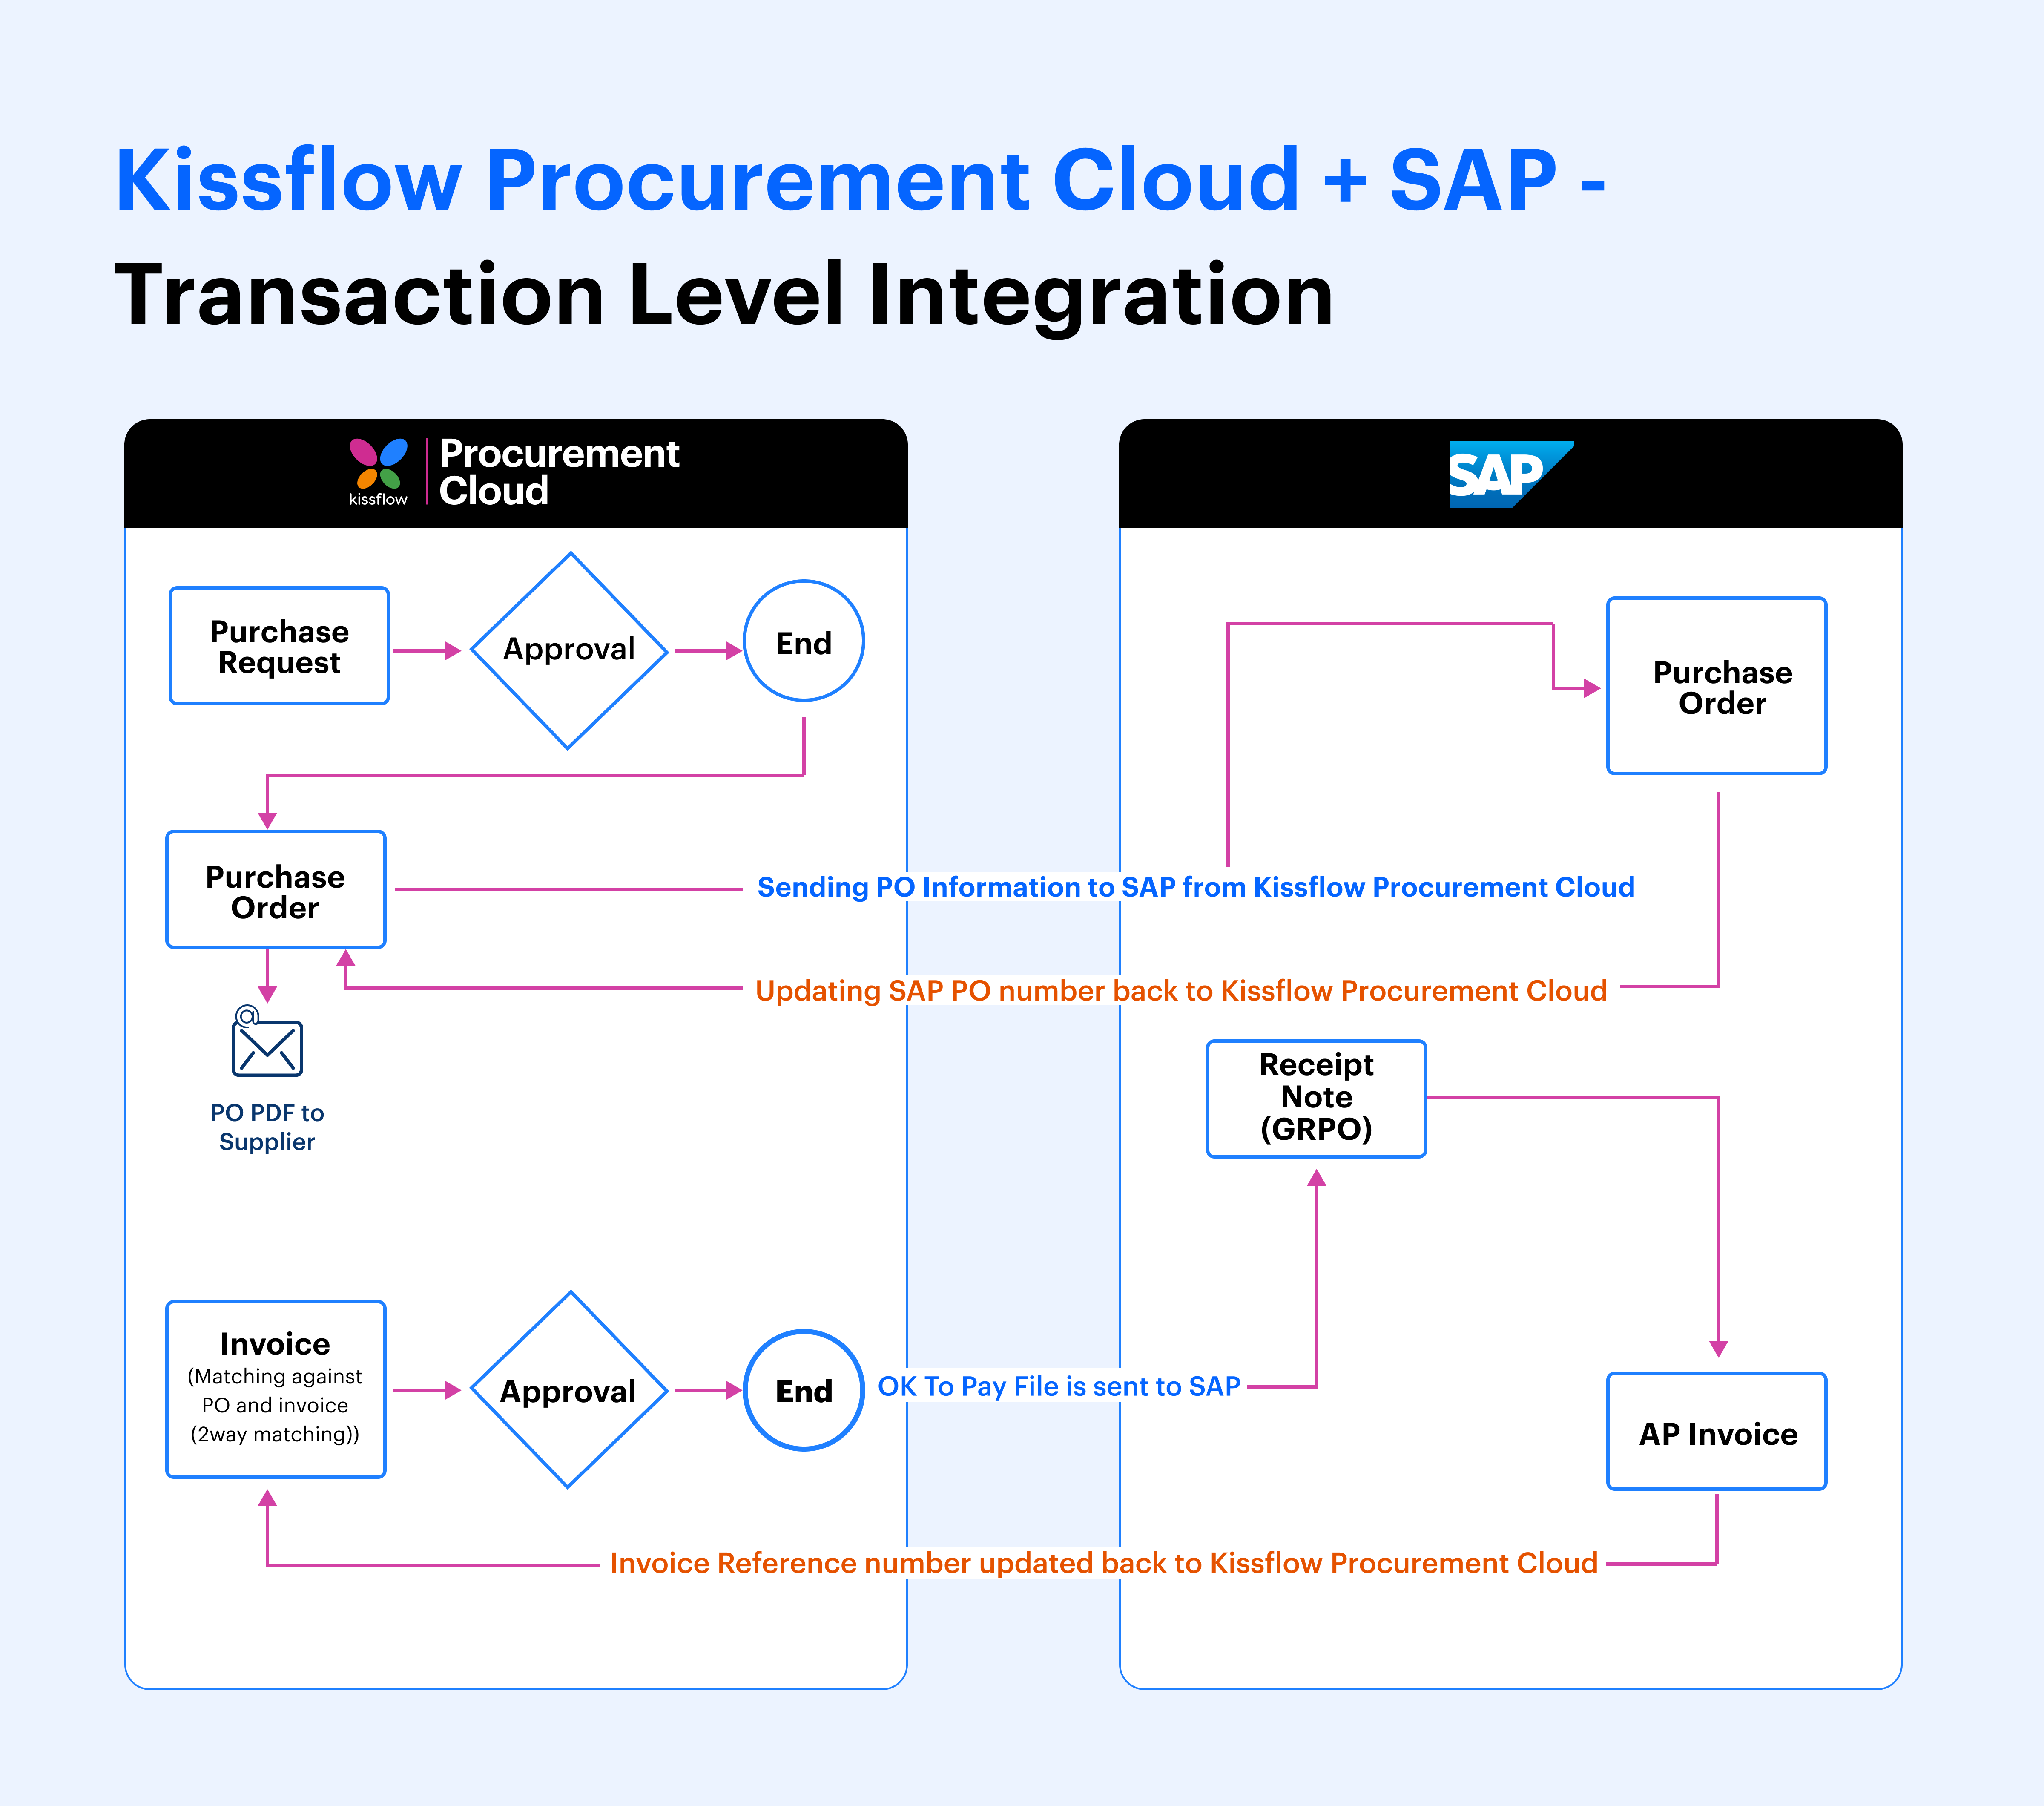 SAP transaction level